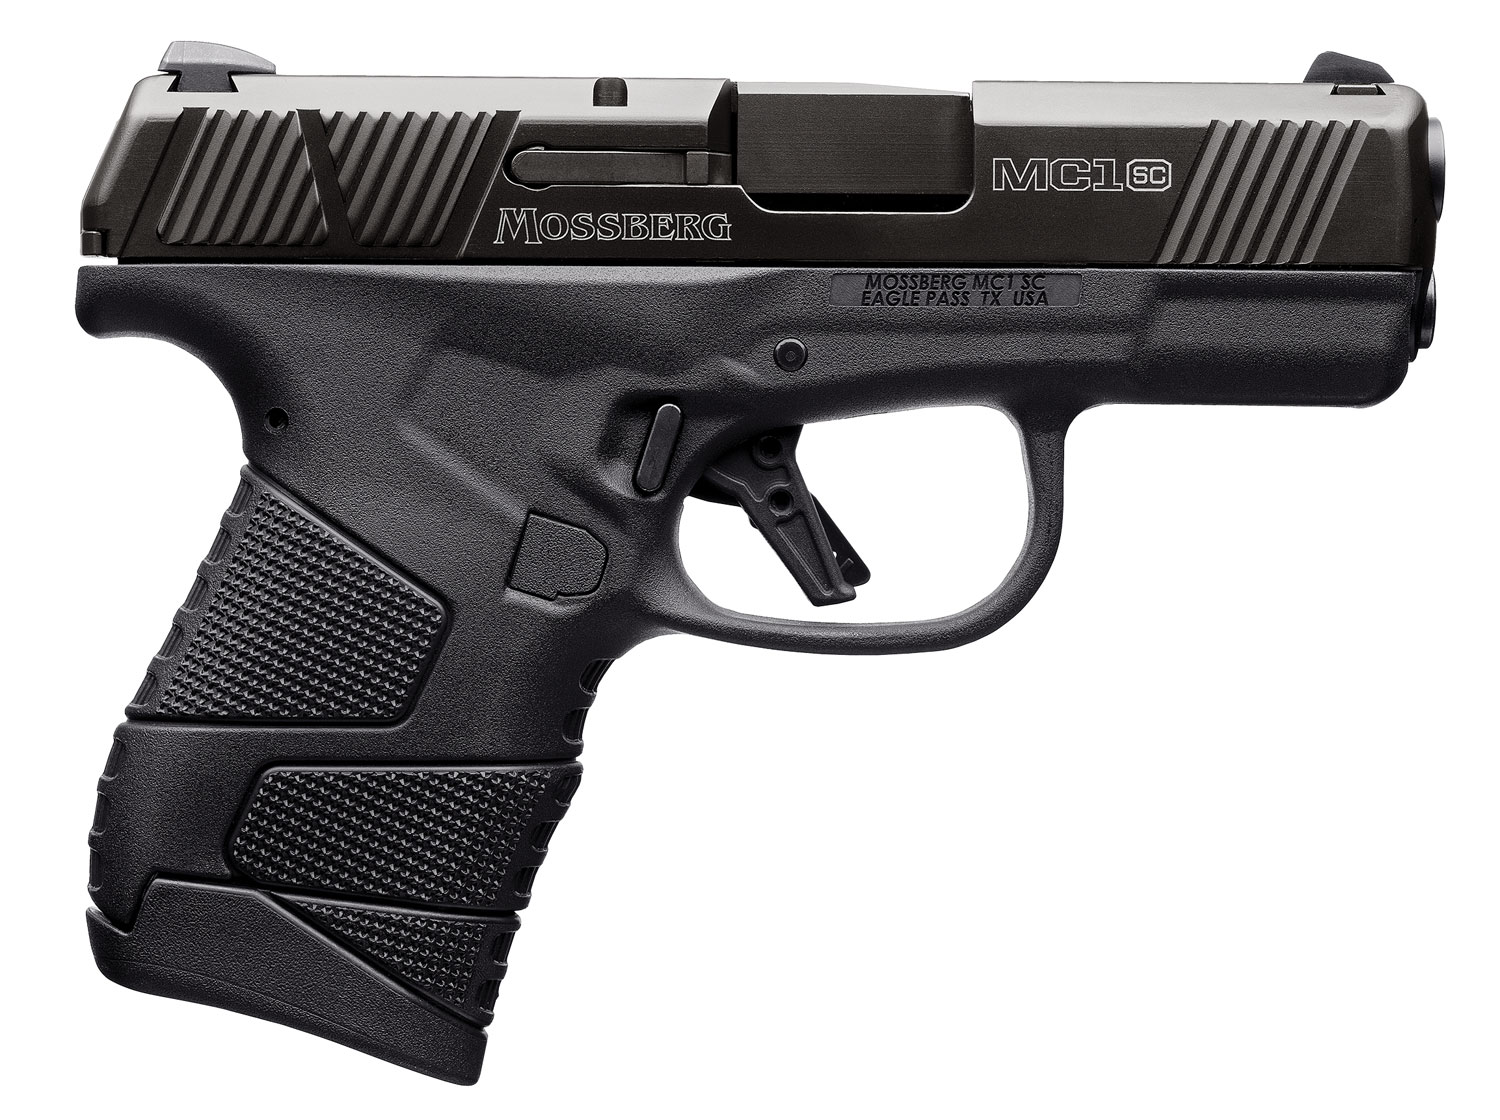 Mossberg MC1 Sub-Compact 9mm Handgun